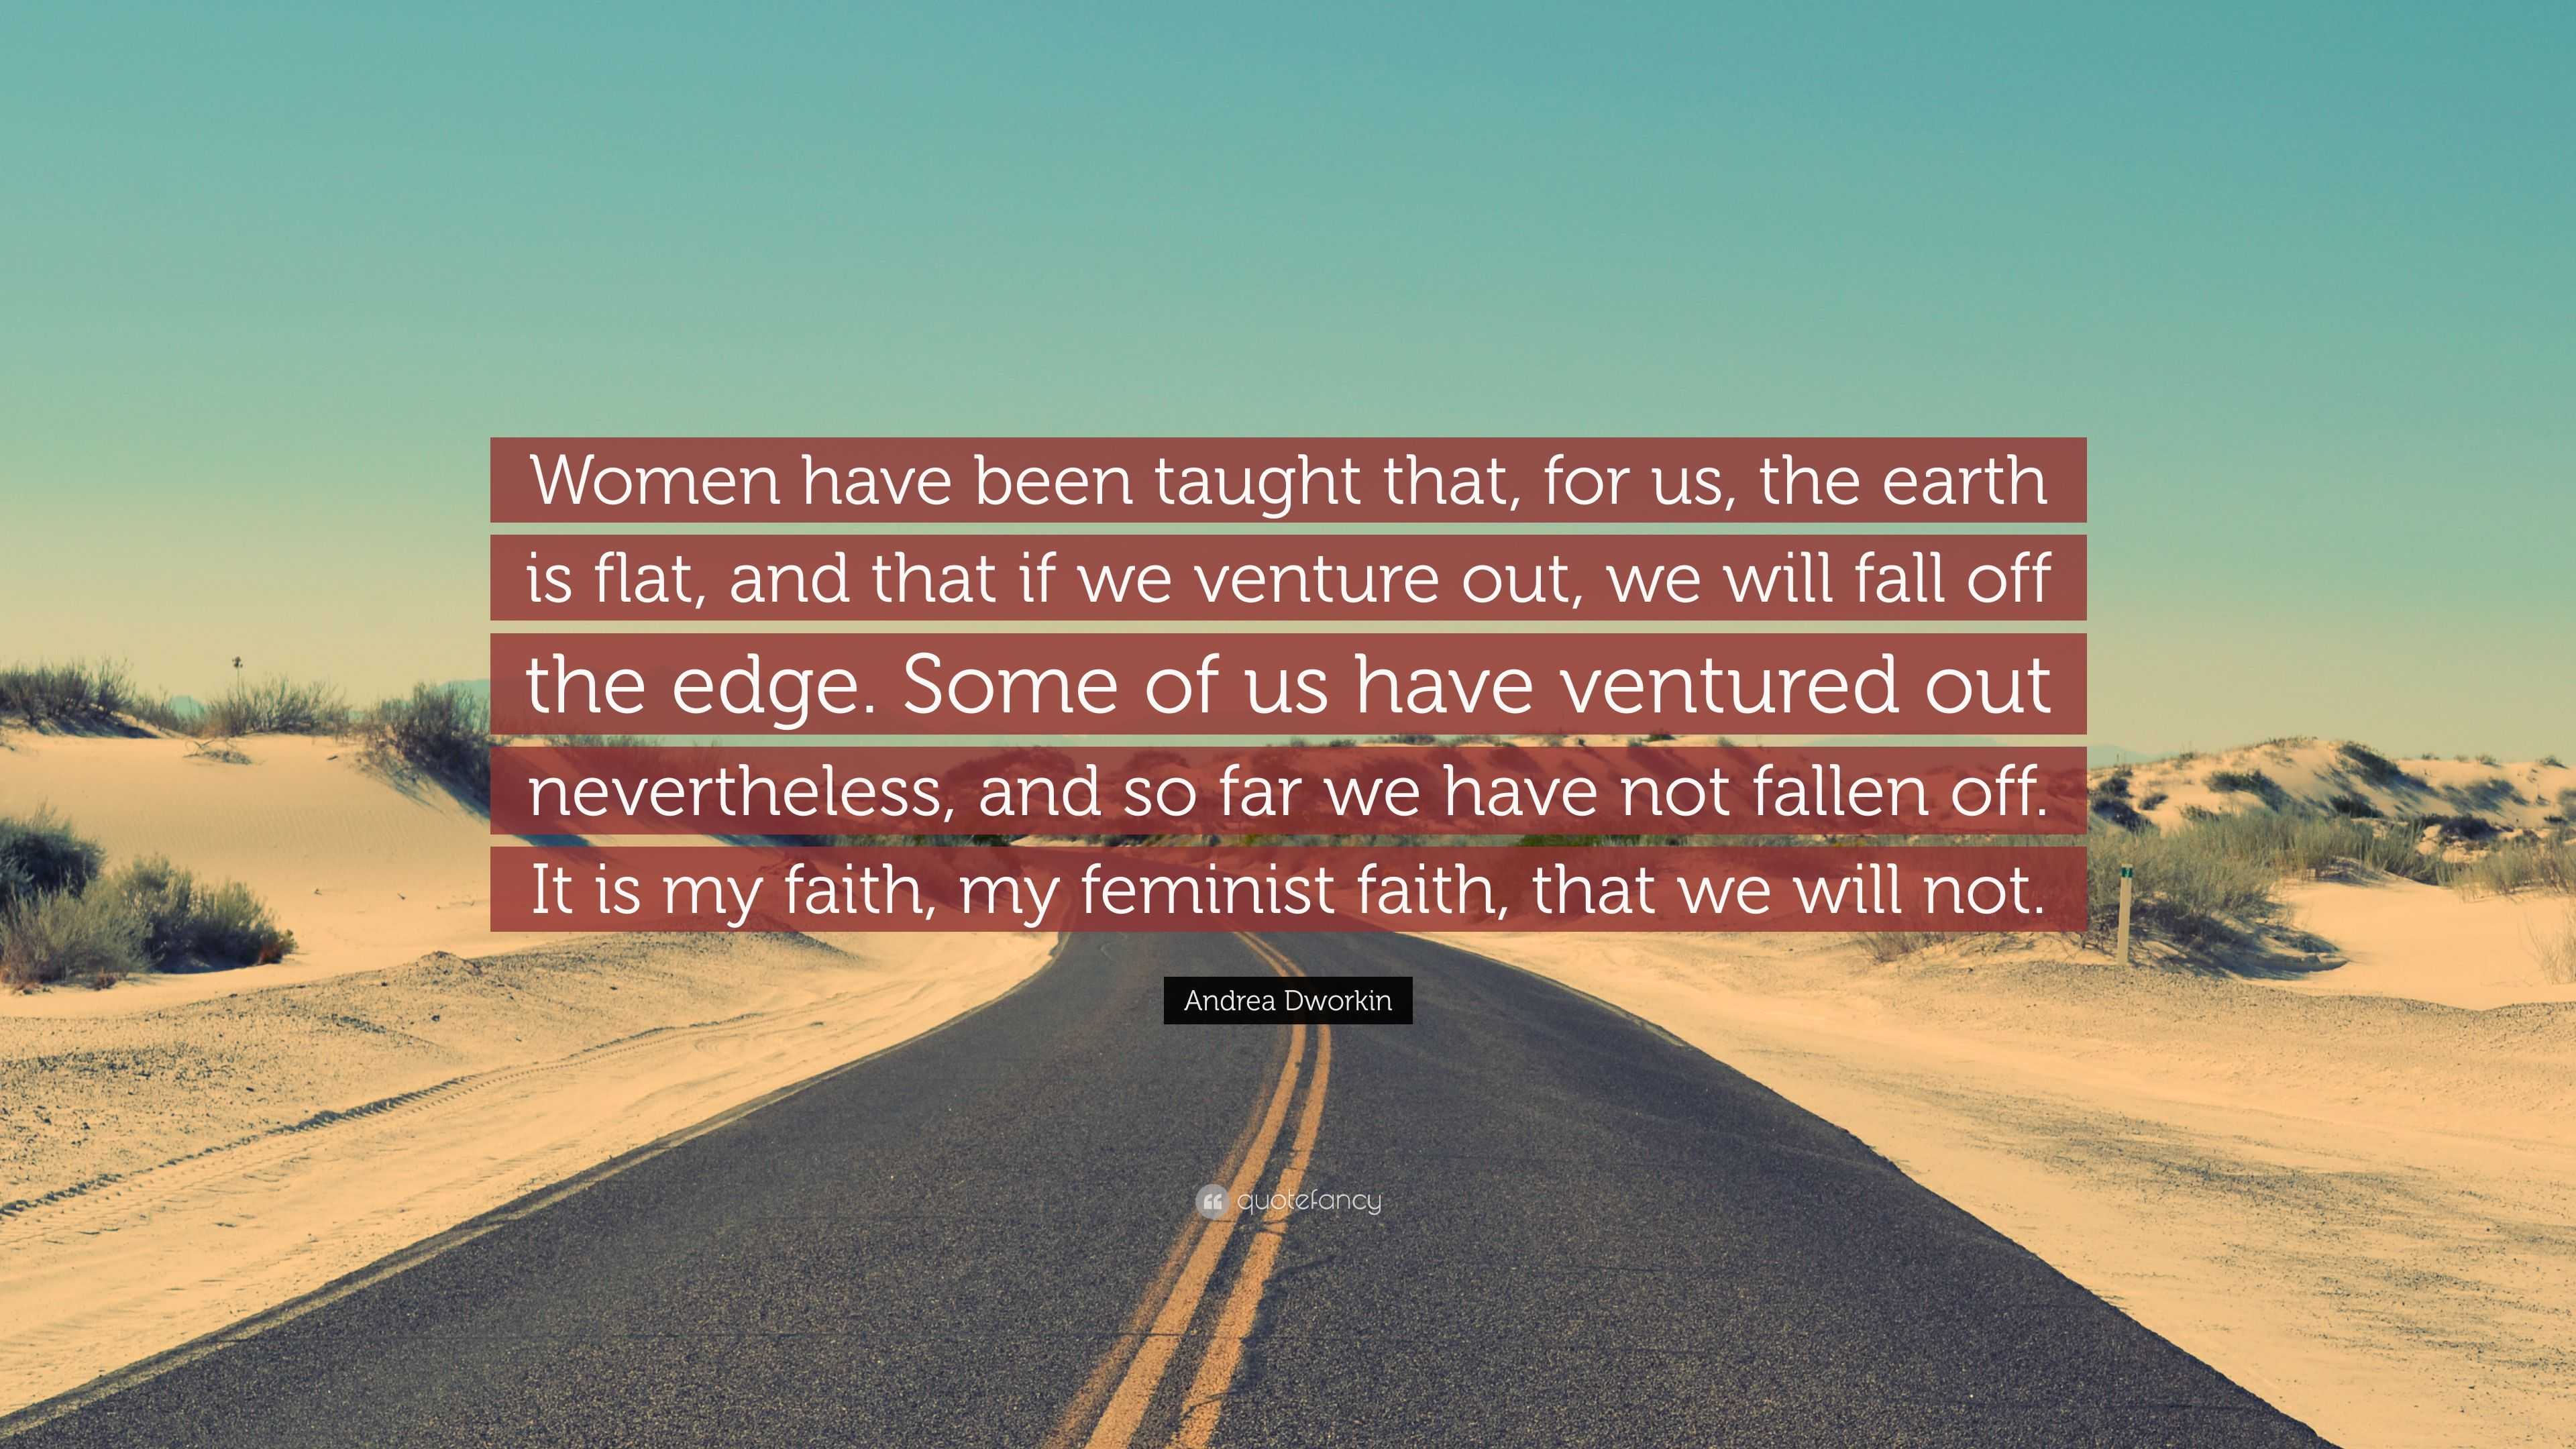 Andrea Dworkin quote: I love, cherish, and respect women in my